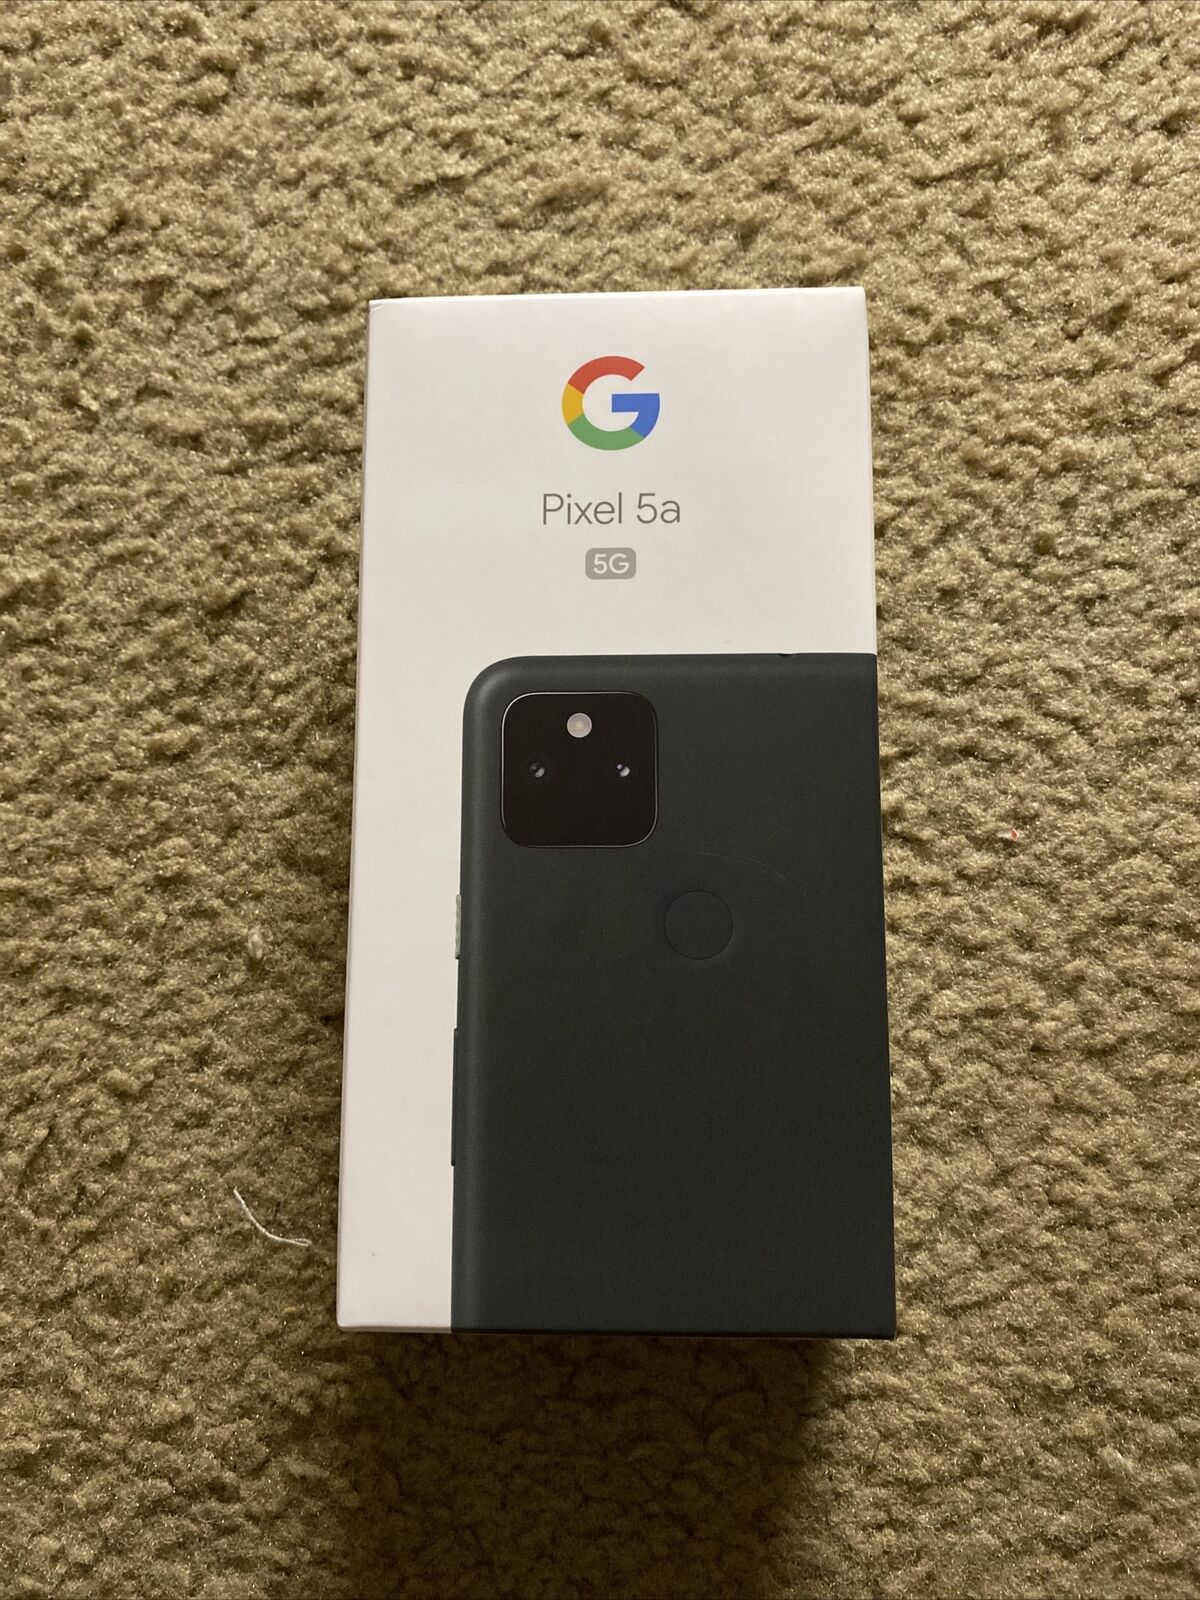 Google Pixel 5a 5G G1F8F - 128GB - Mostly Black (Unlocked) (Single 